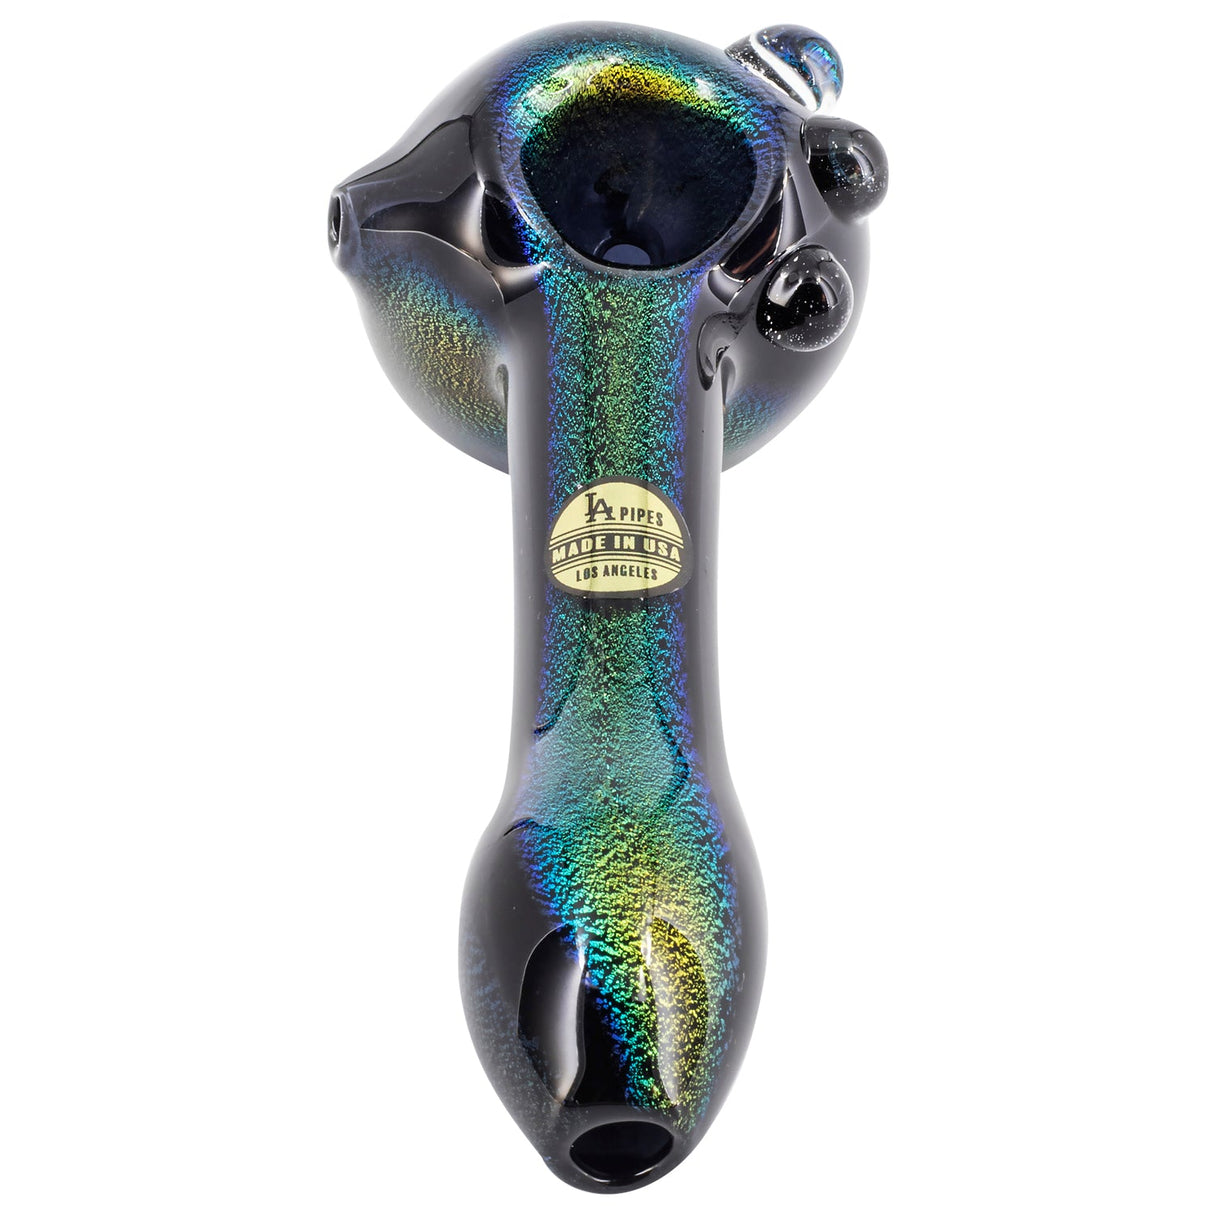 LA Pipes Galaxy Dichroic Drooper Hand-Pipe, 4" Borosilicate Glass, Spoon Design, Front View